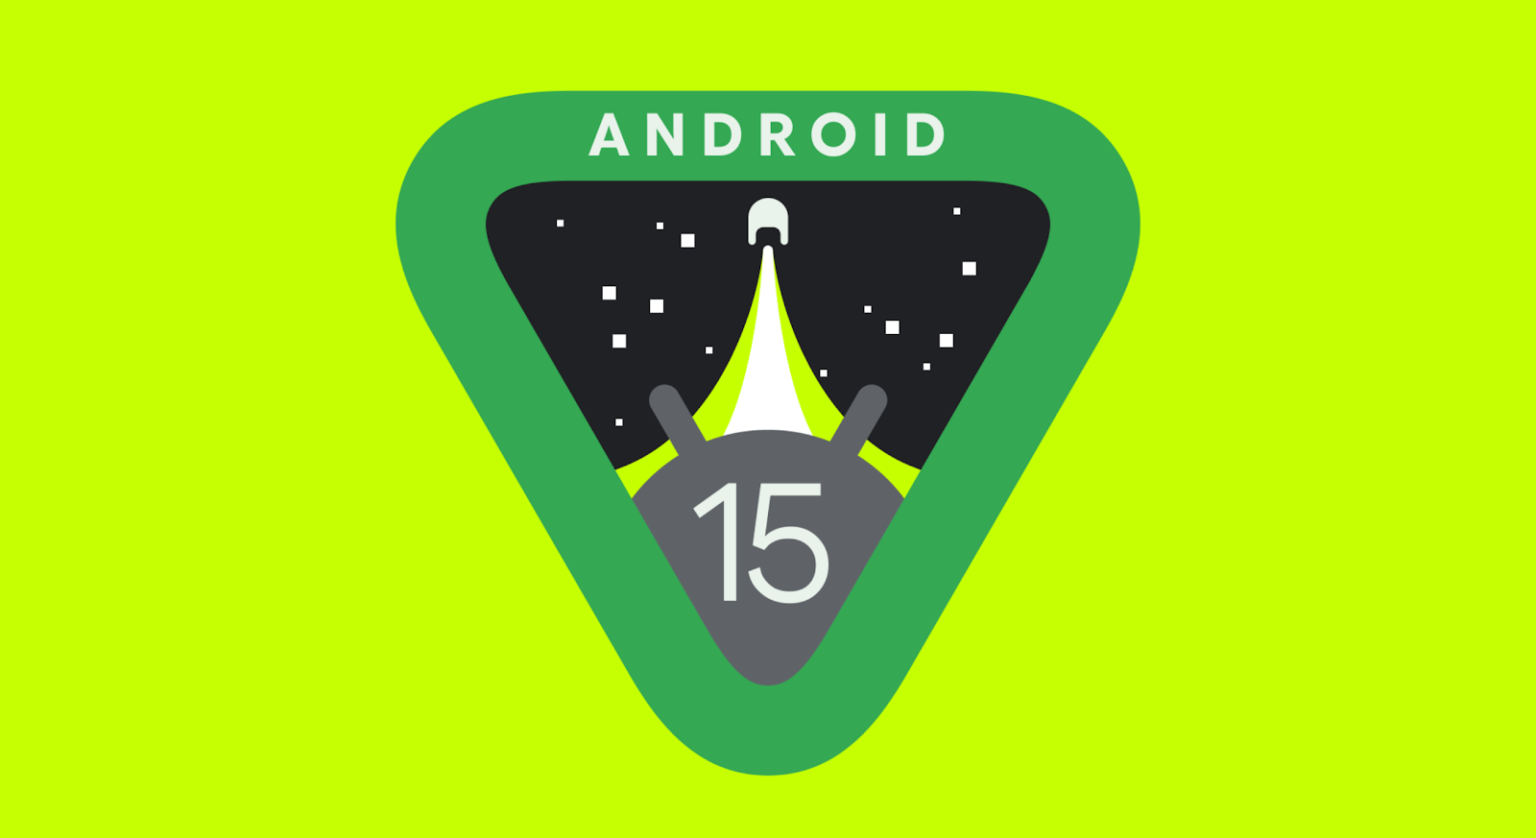 Android 15 Dp1 Social+1